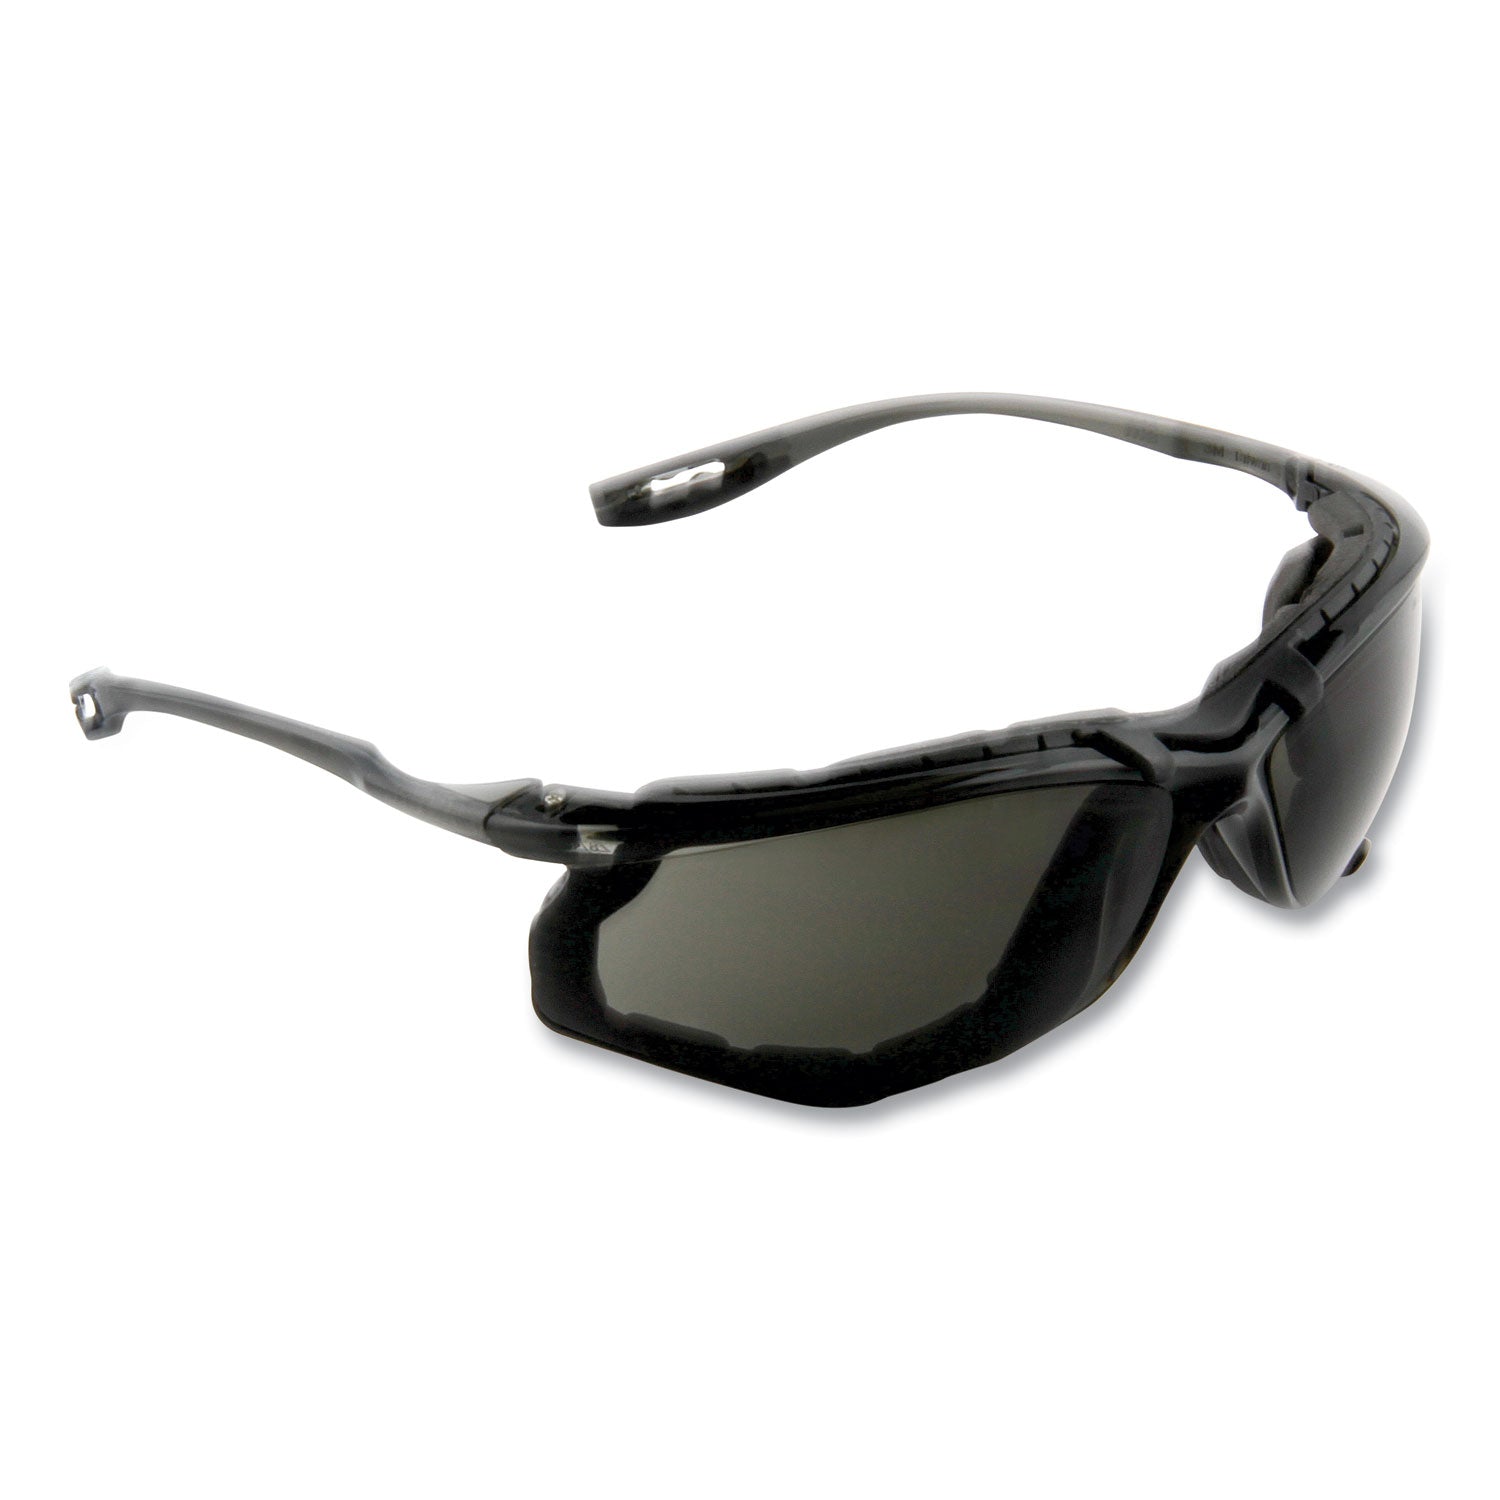 virtua-ccs-protective-eyewear-with-foam-gasket-black-gray-plastic-frame-gray-polycarbonate-lens_mmm1187300000 - 1